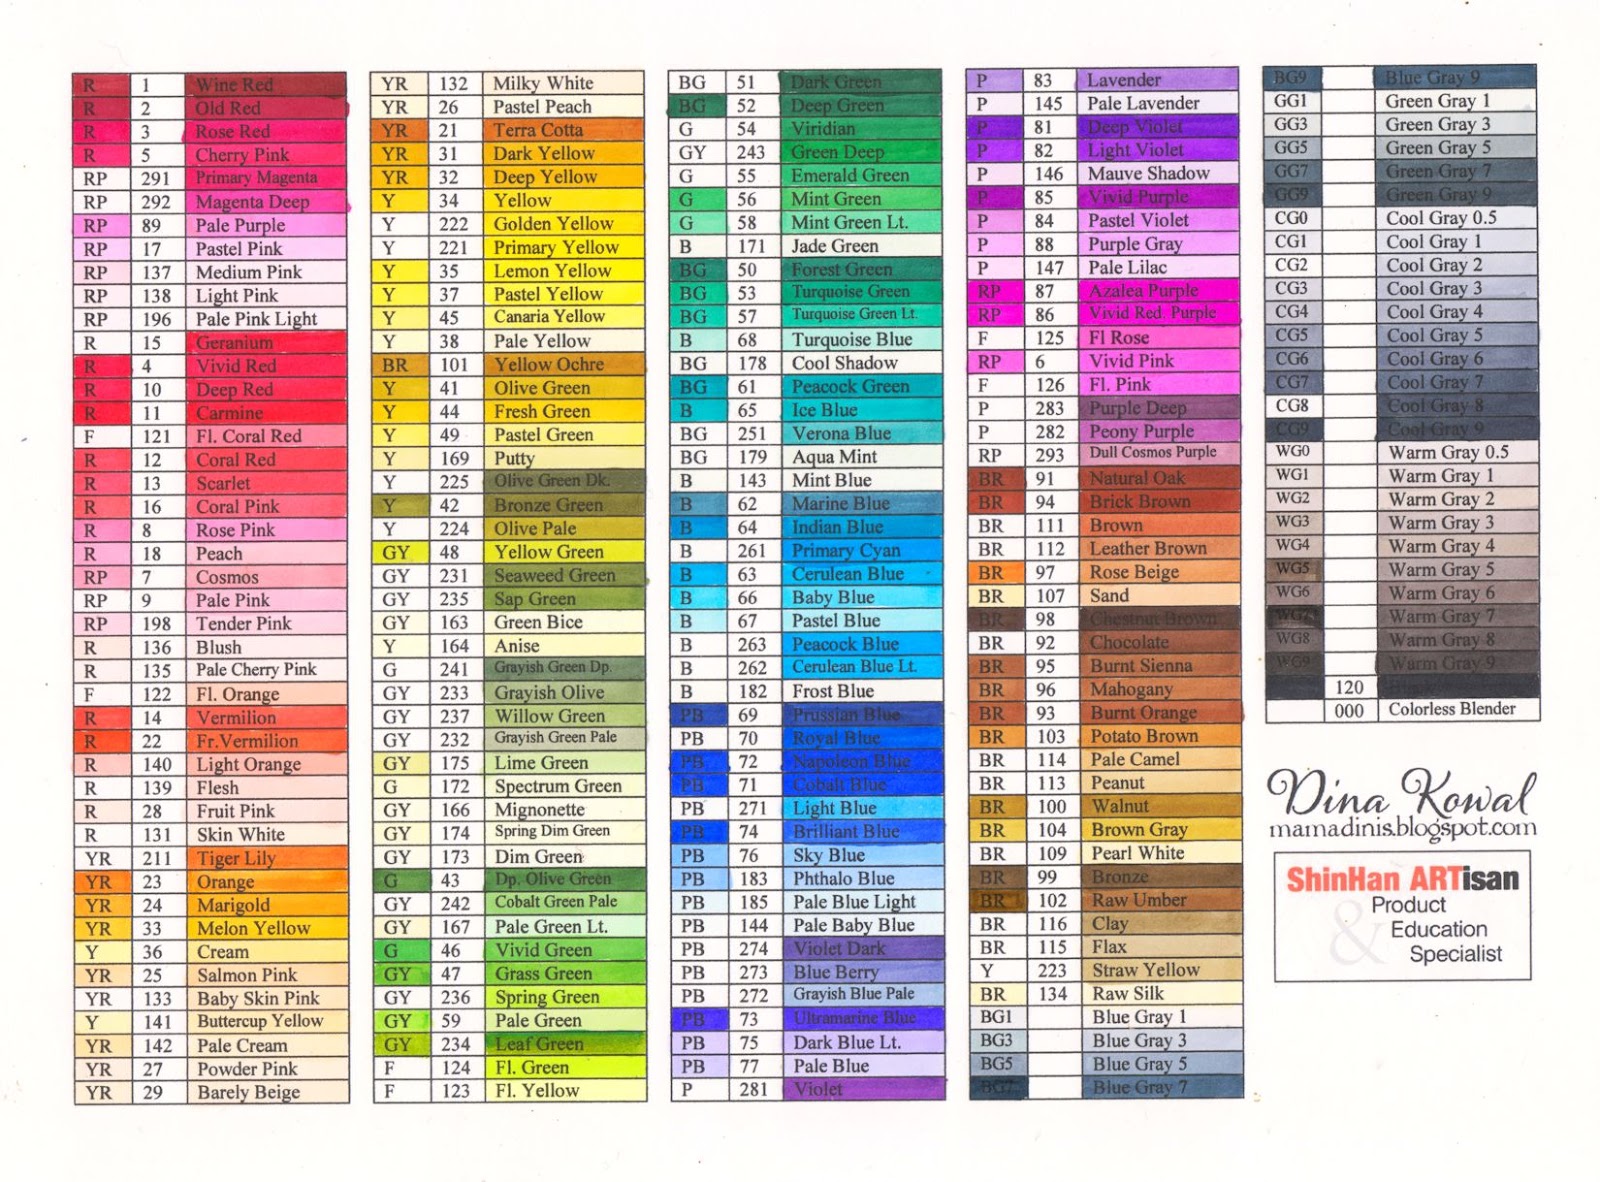 Dina Kowal Creative: Touch Marker Color Charts